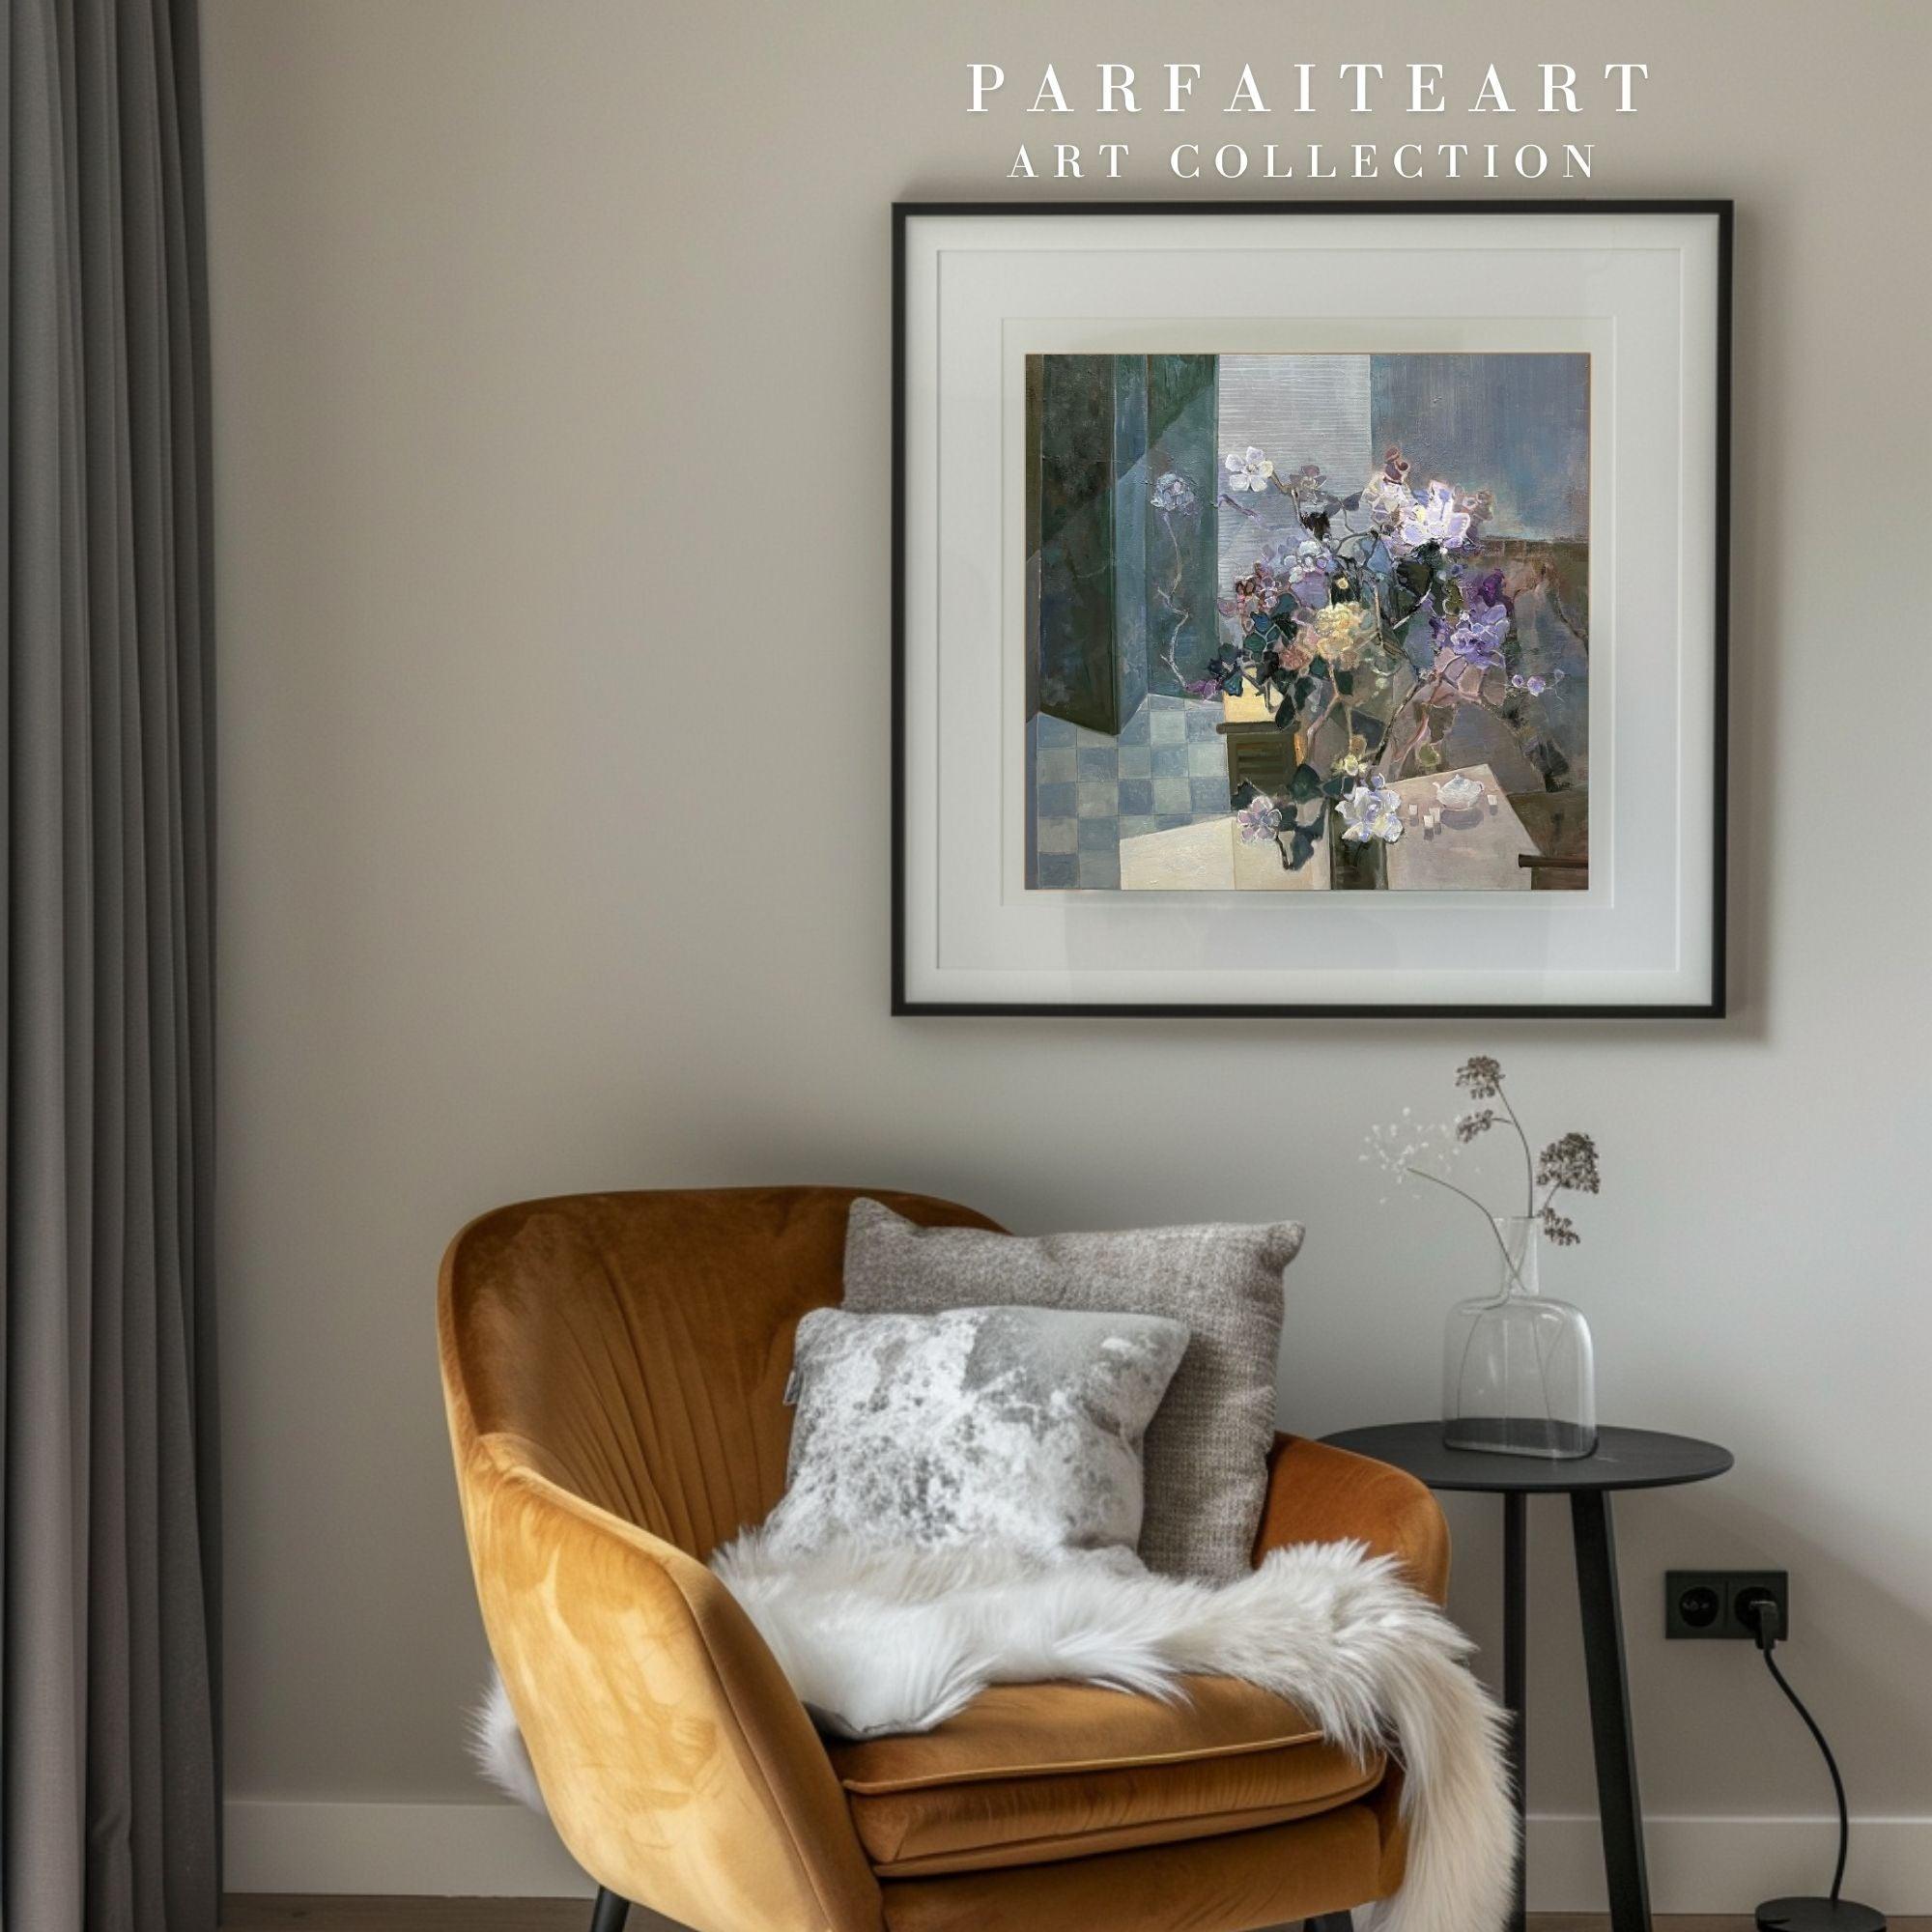 Original Painting,Handmade,Canvas Print,Abstract Art,Botany,Art Decor For Living Room O18 - ParfaiteArt